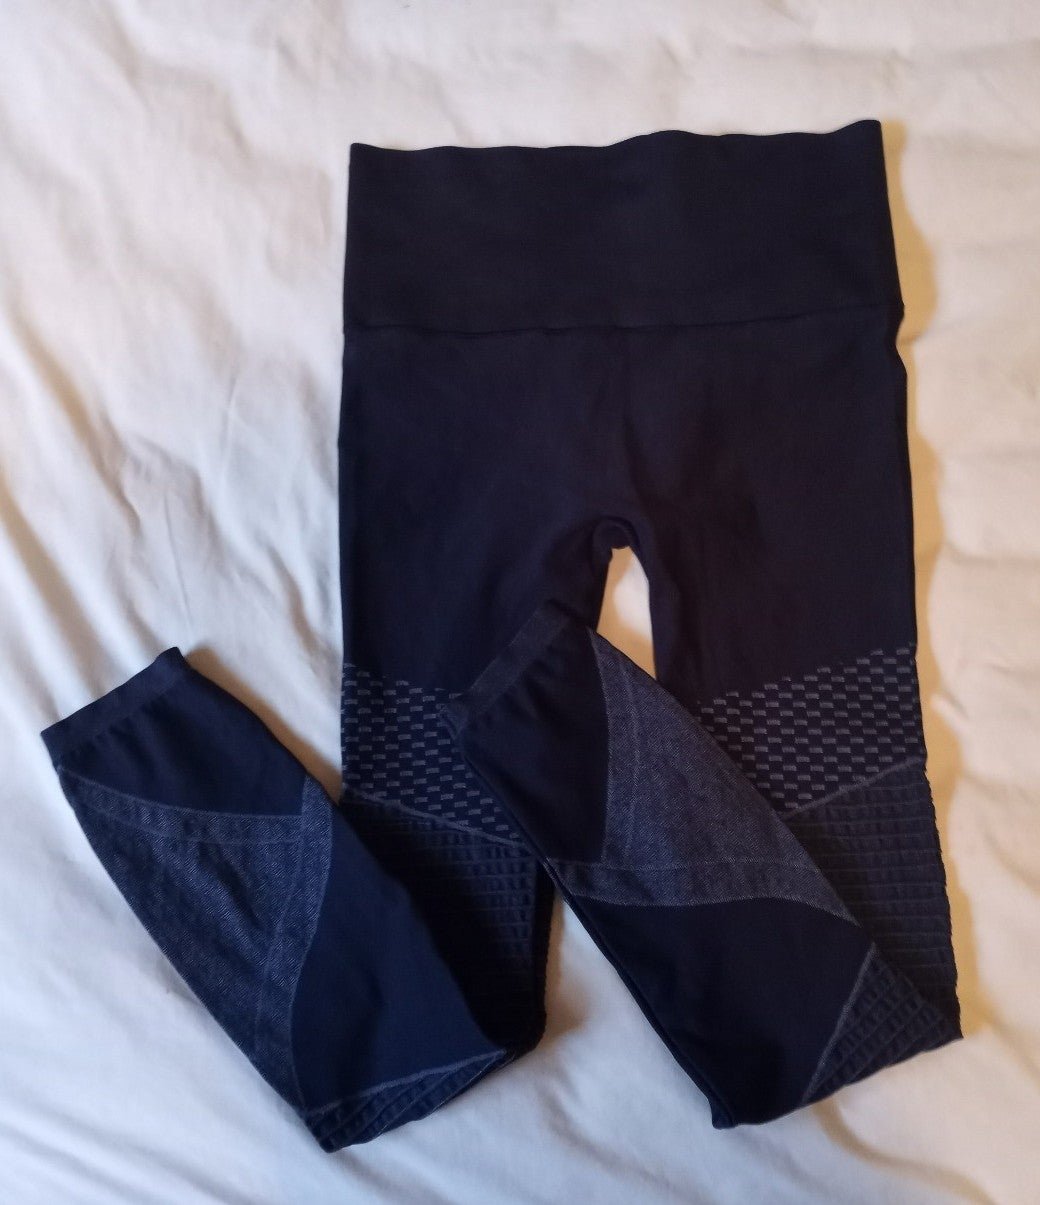 Wholesale price Spanx Body Shaper Pants leggings o92Z6j5tF New Style